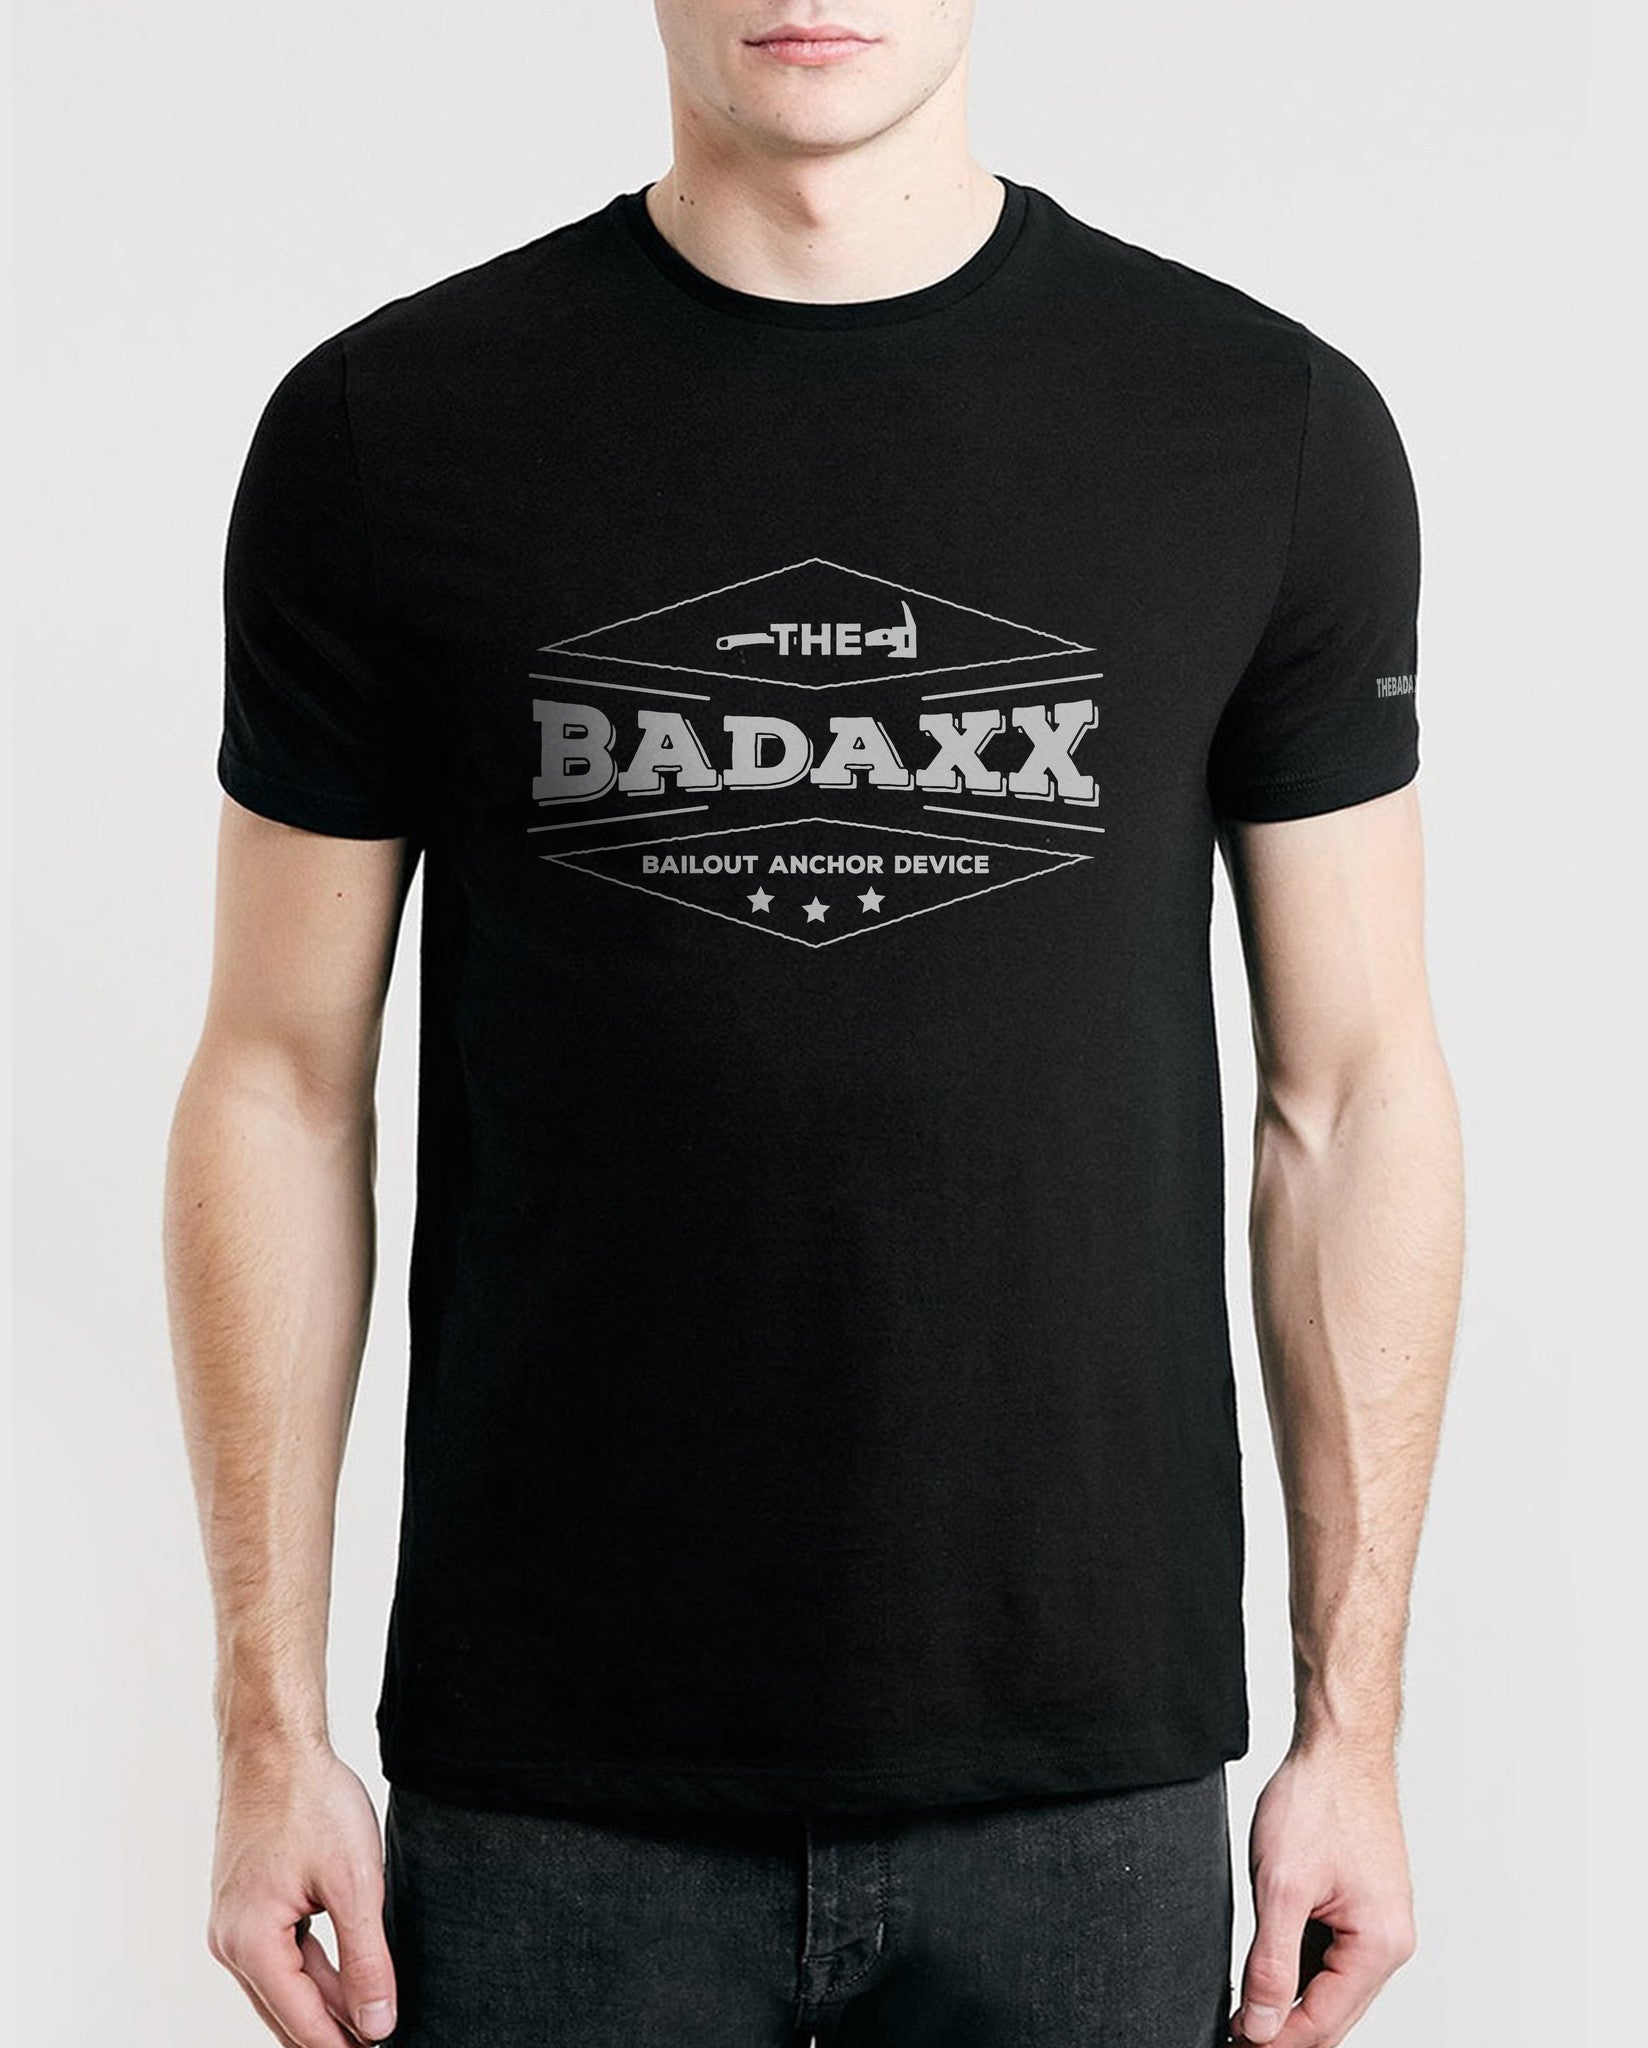 Schelden positie Hoe The BADAXX All American Logo T-Shirt | The Badaxx | First Responder and  Firefighter Tool